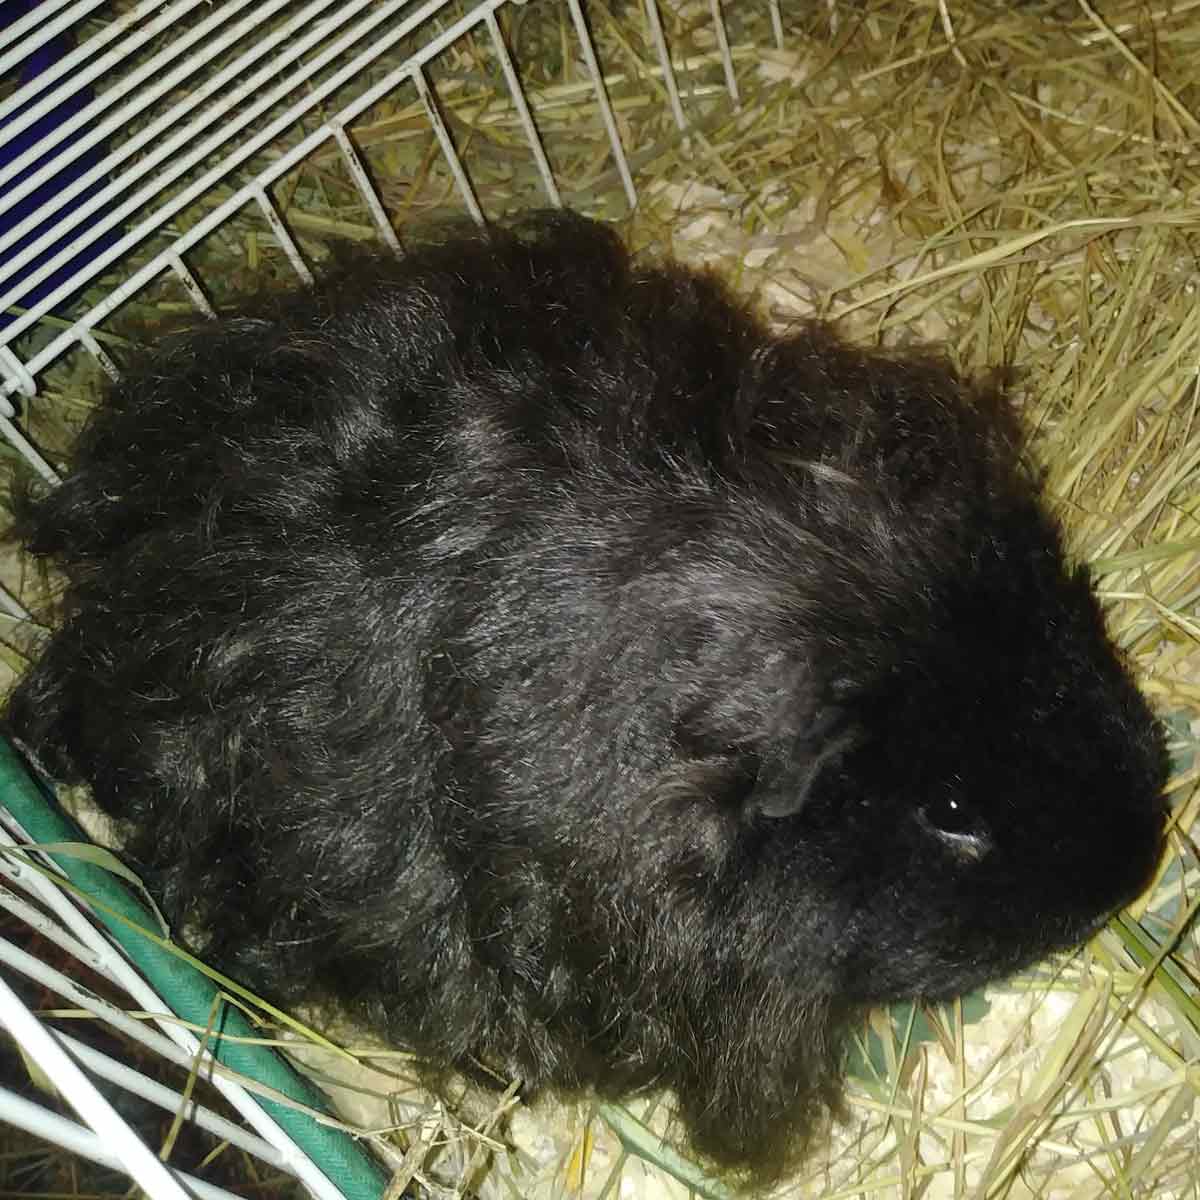 Birth of guinea pig 